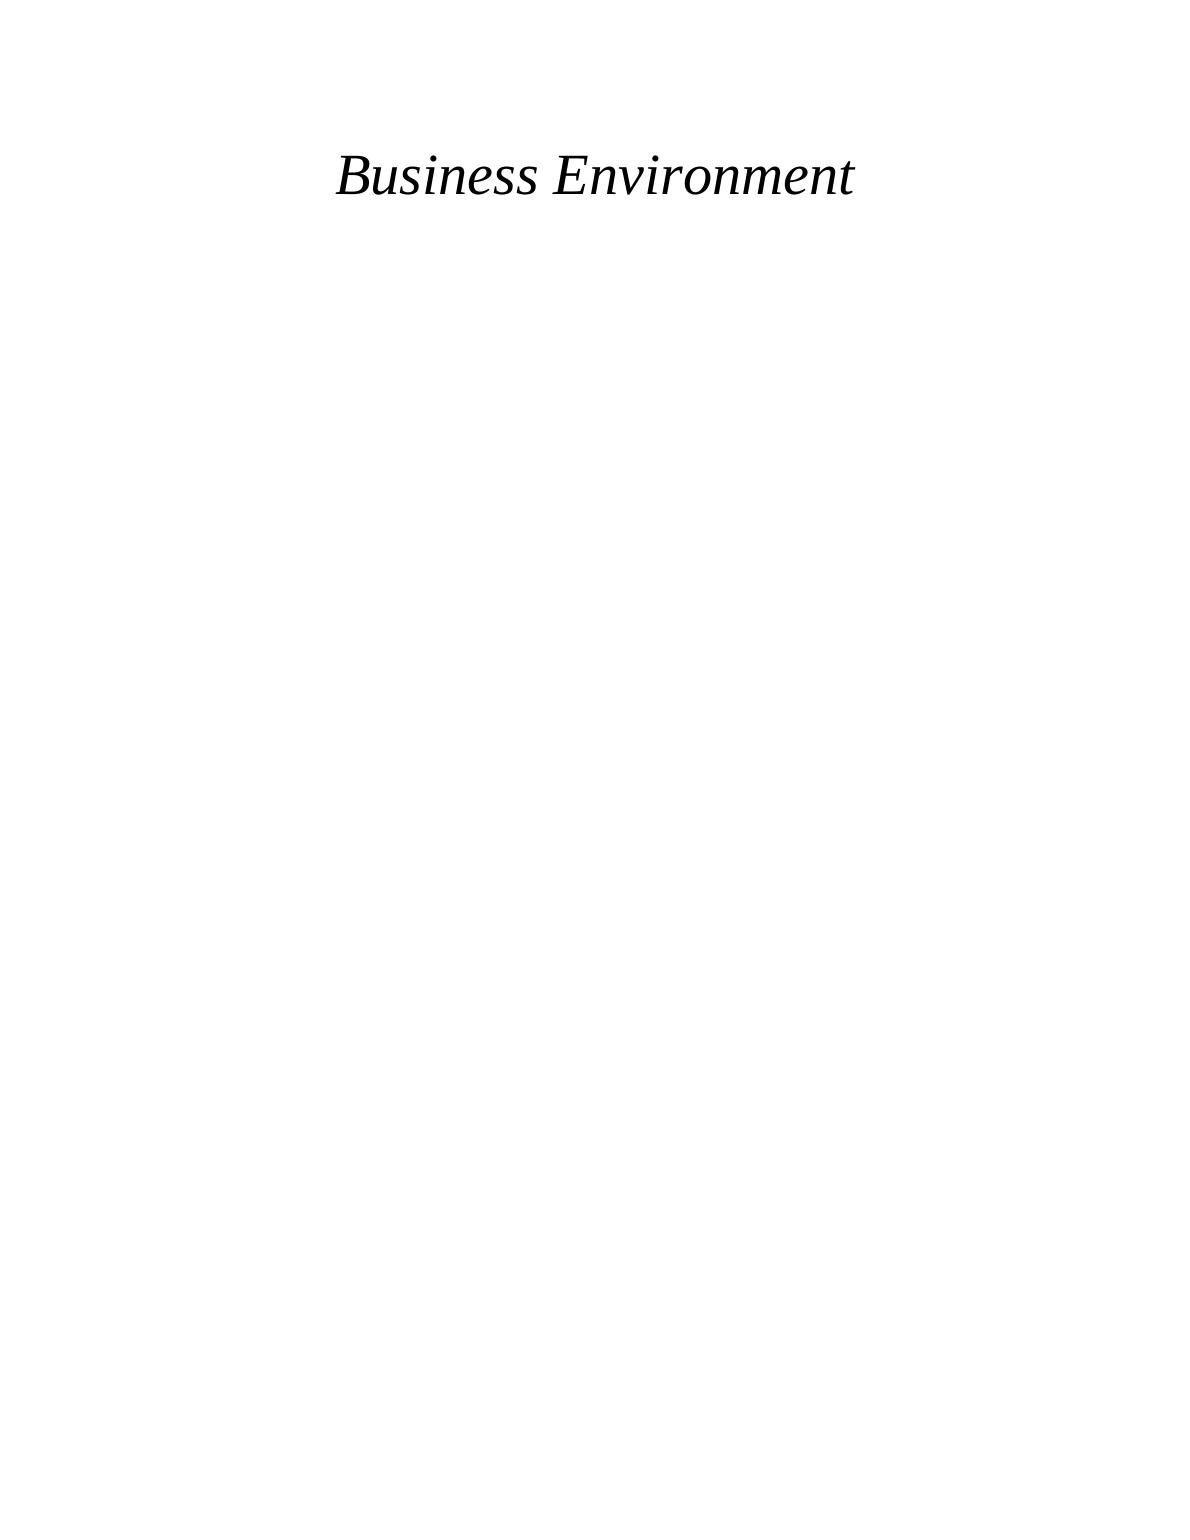 Business Environment of John Lewis Partnership_1